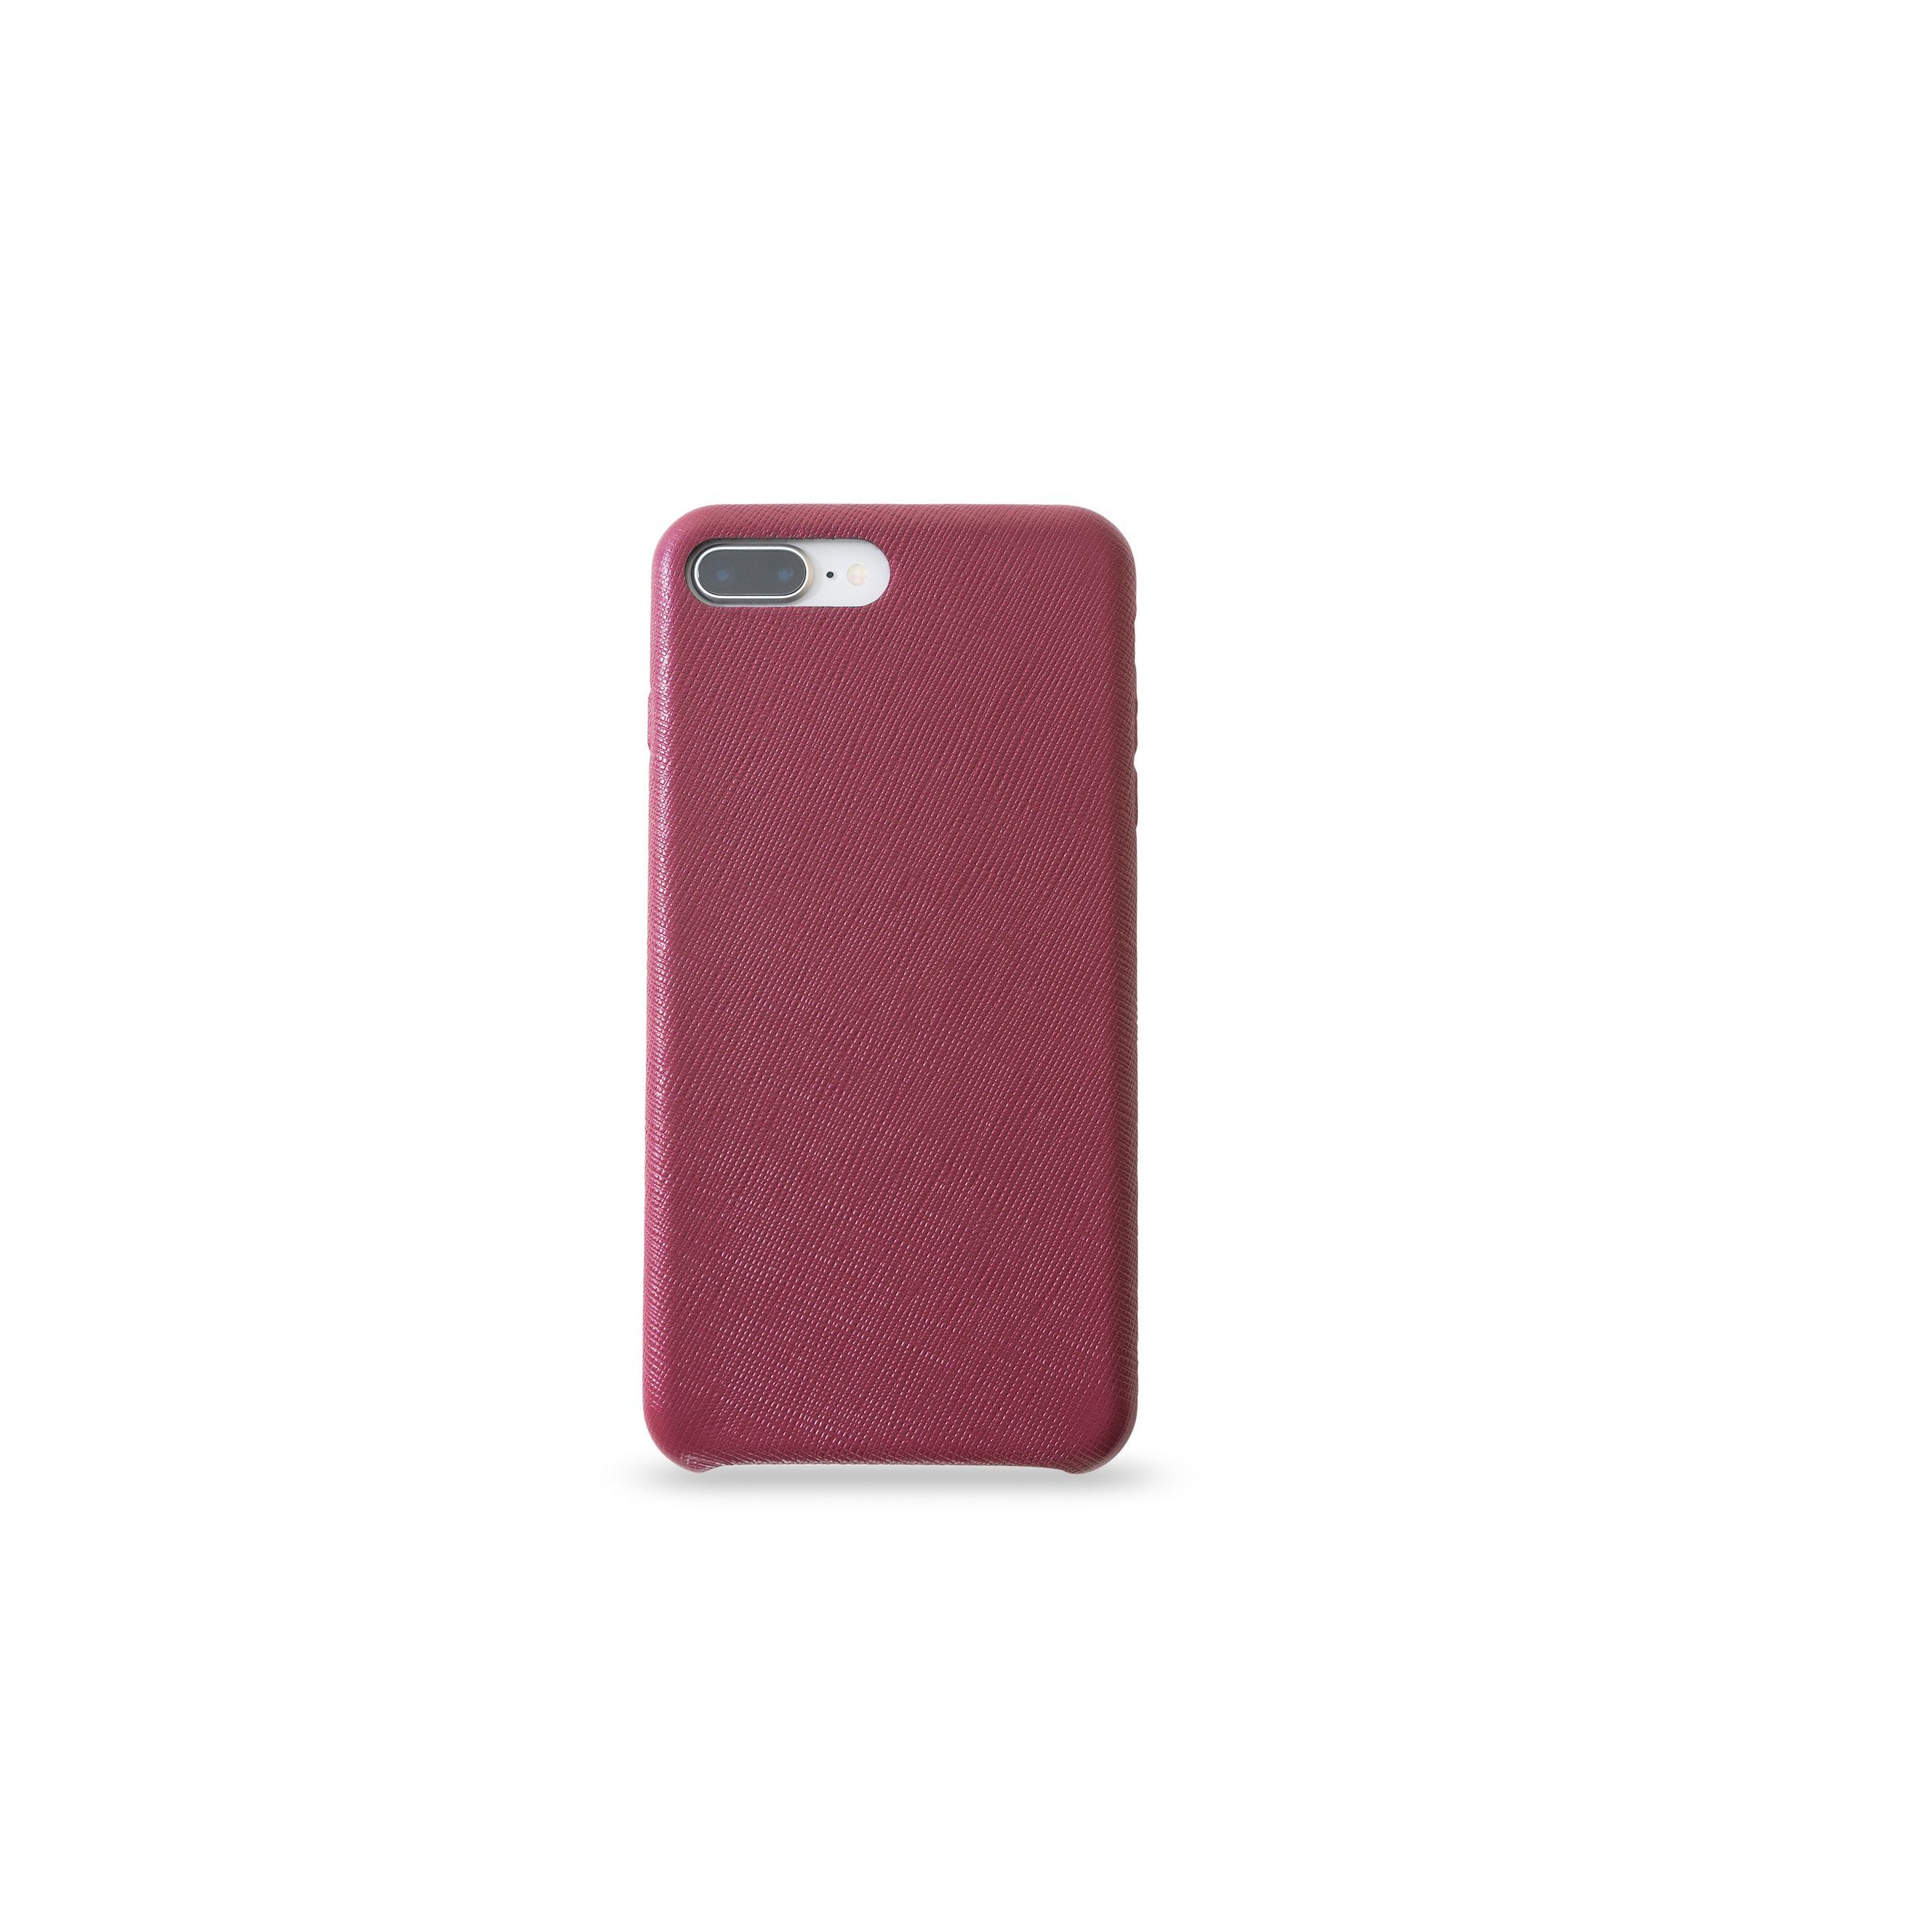 KMP Creative Lifesytle Product Handyhülle Echtleder Schutzhülle für iPhone 8 Plus Bordeaux Red 5,5 Zoll